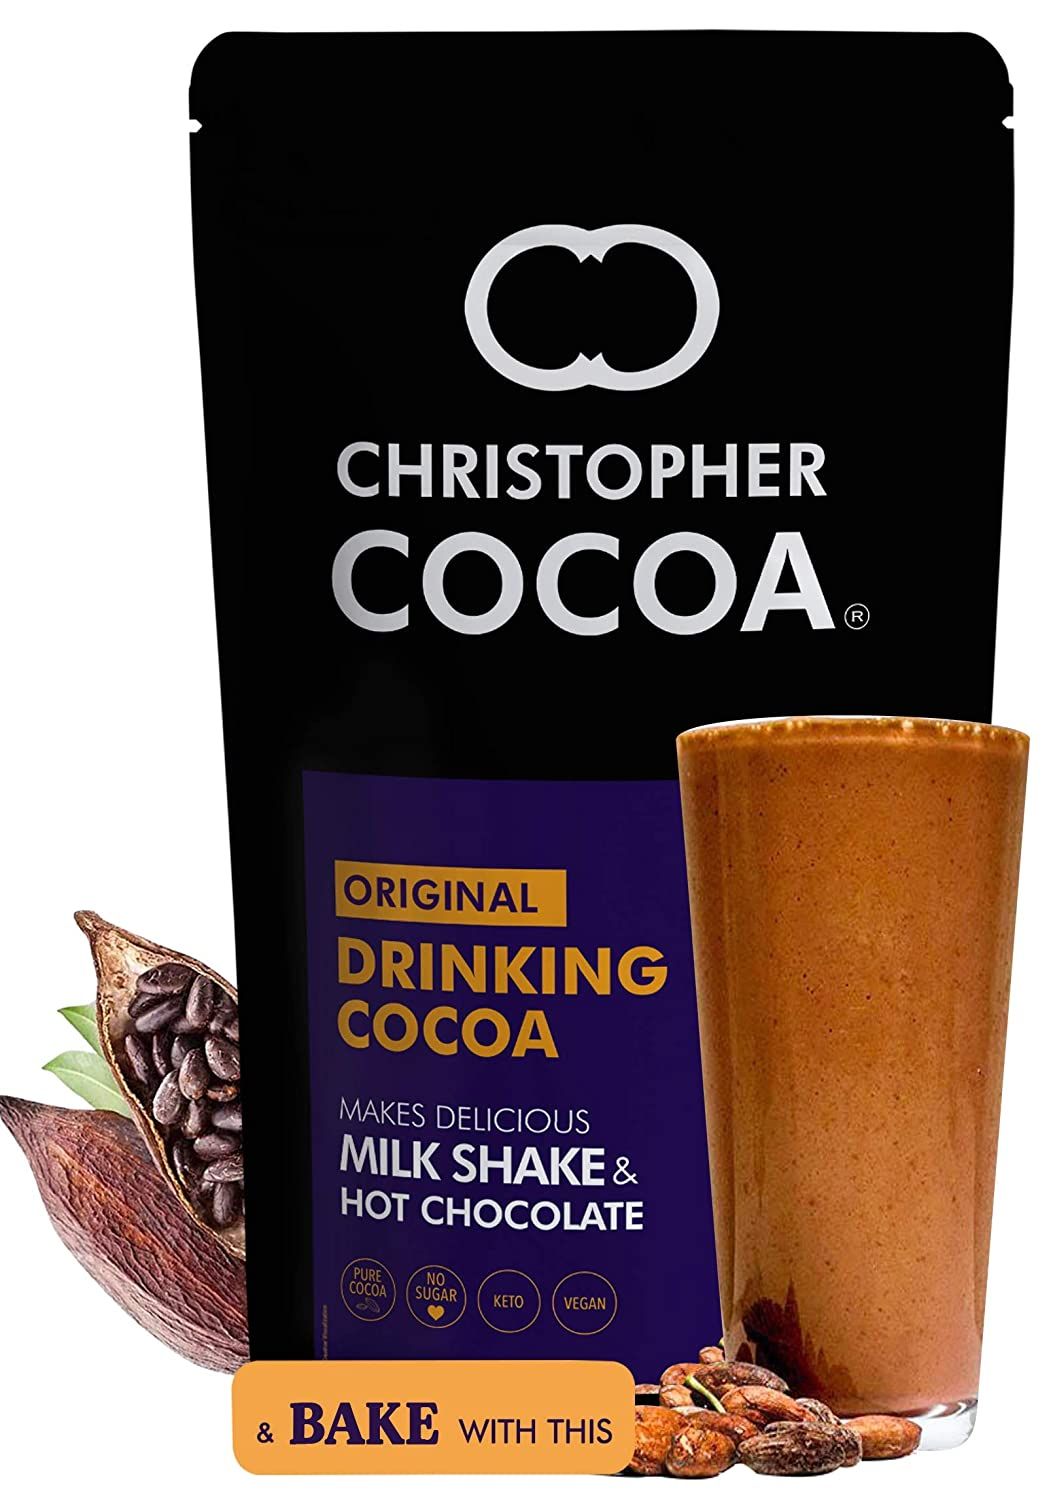 Christopher Cocoa Chocolate Cocoa Powder Image